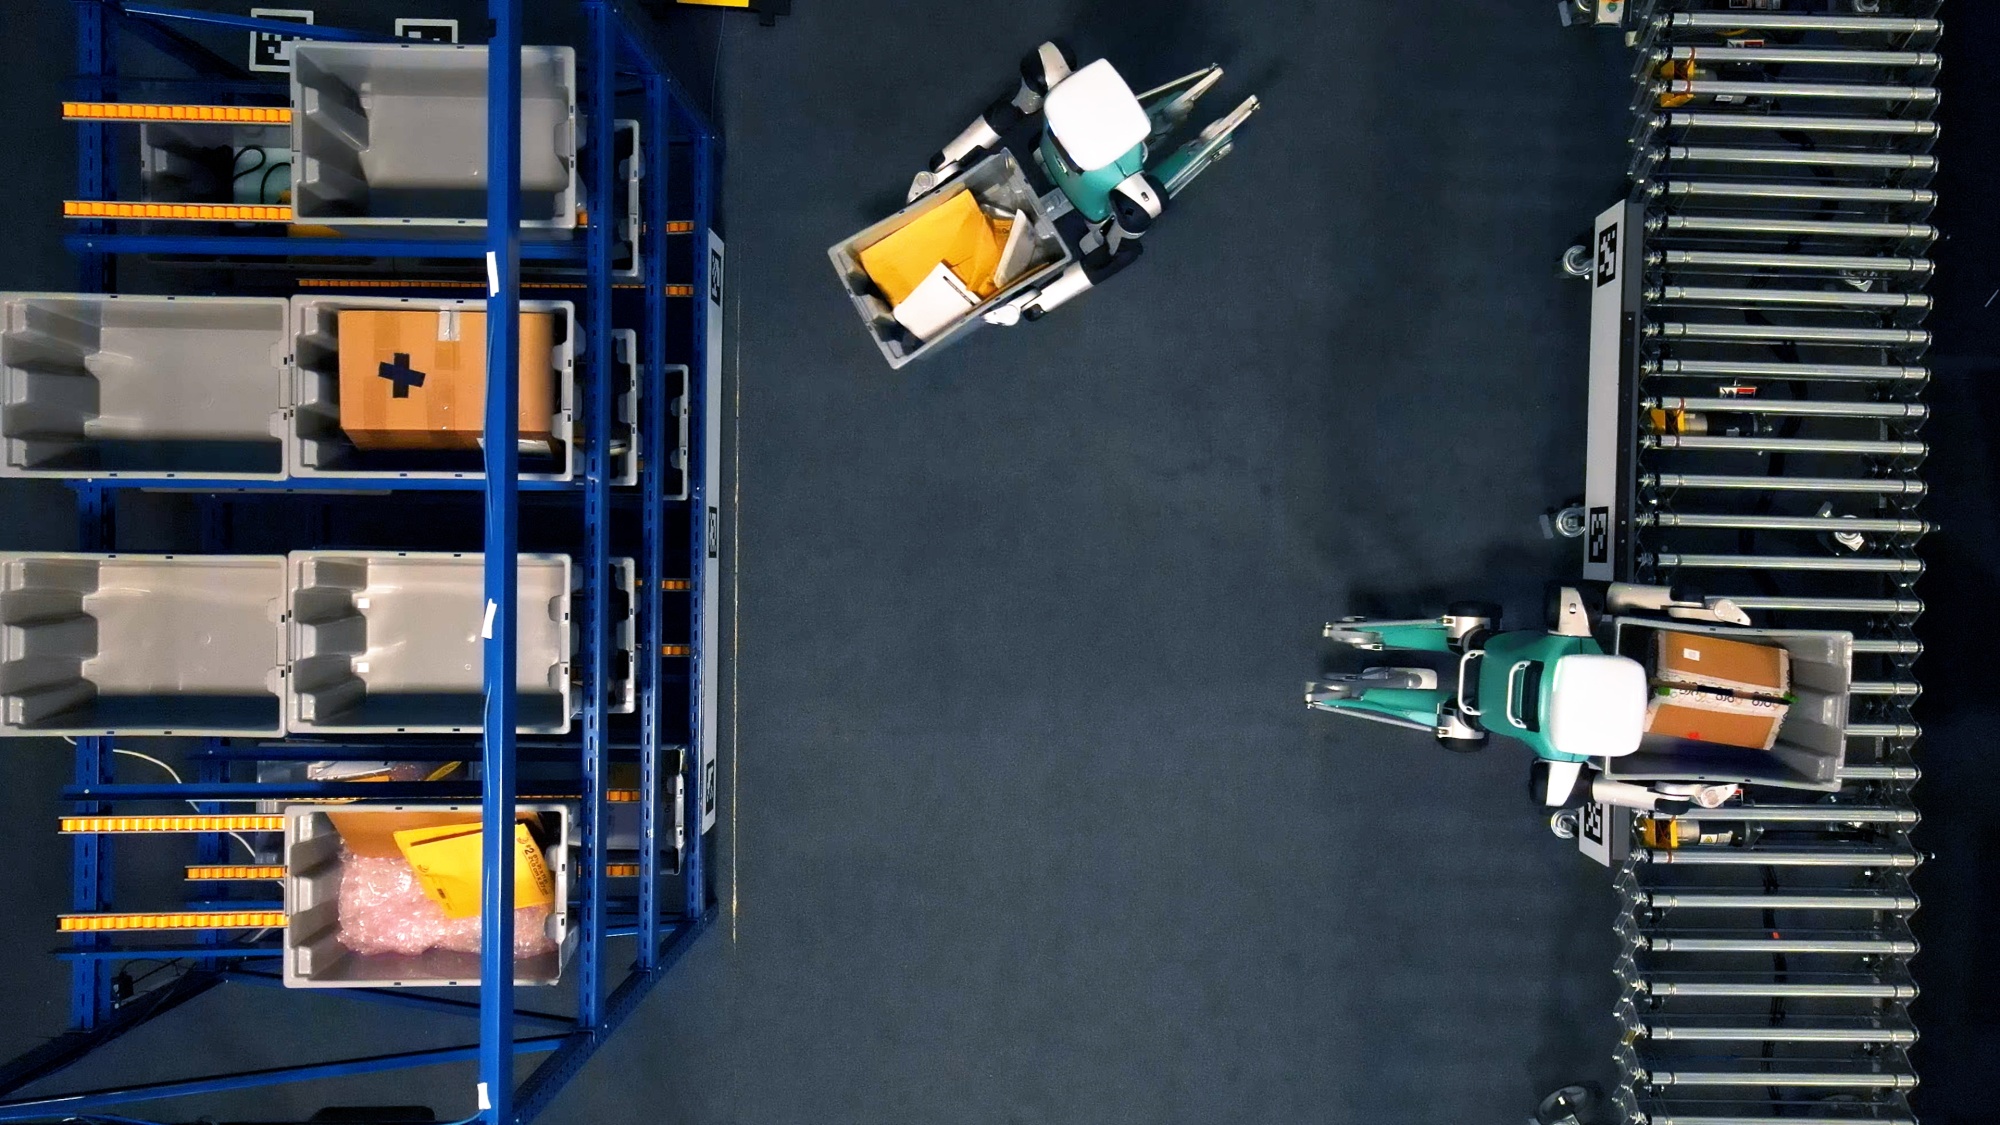 Amazon Tests Humanoid Robot in Warehouse Automation Push - Bloomberg